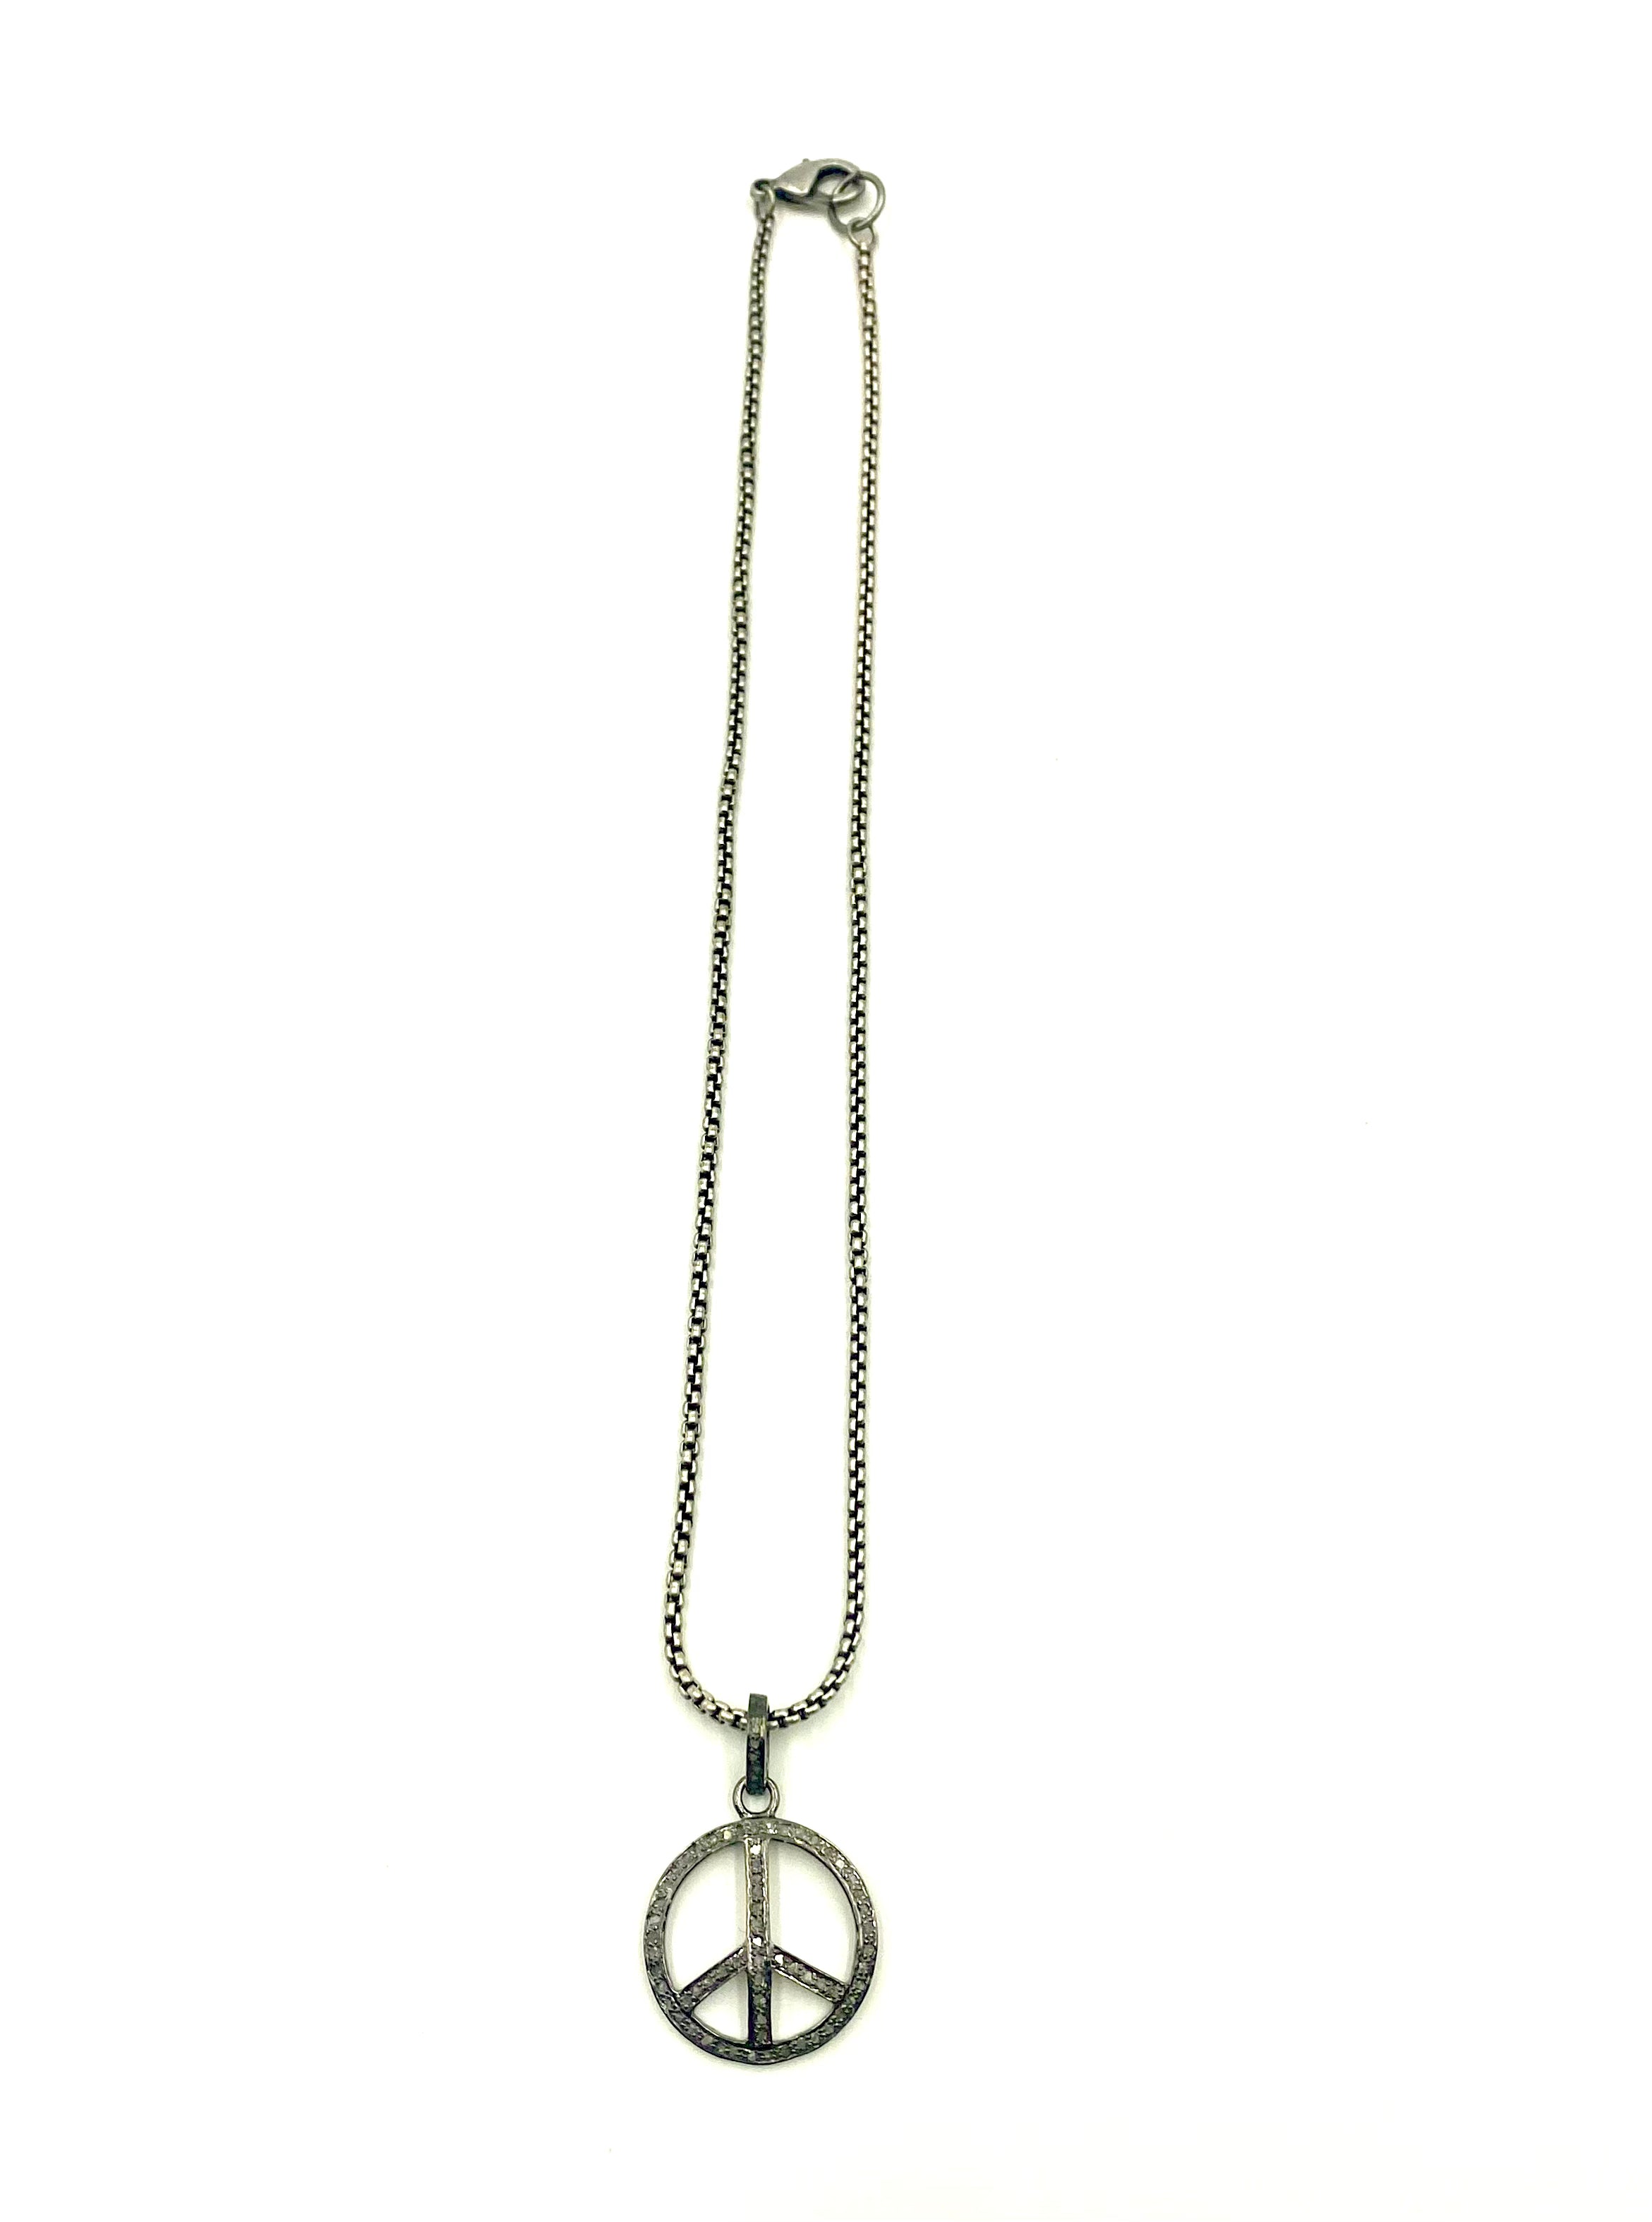 Peace Medium- Sterling silver necklace with medium pave diamond peace charm